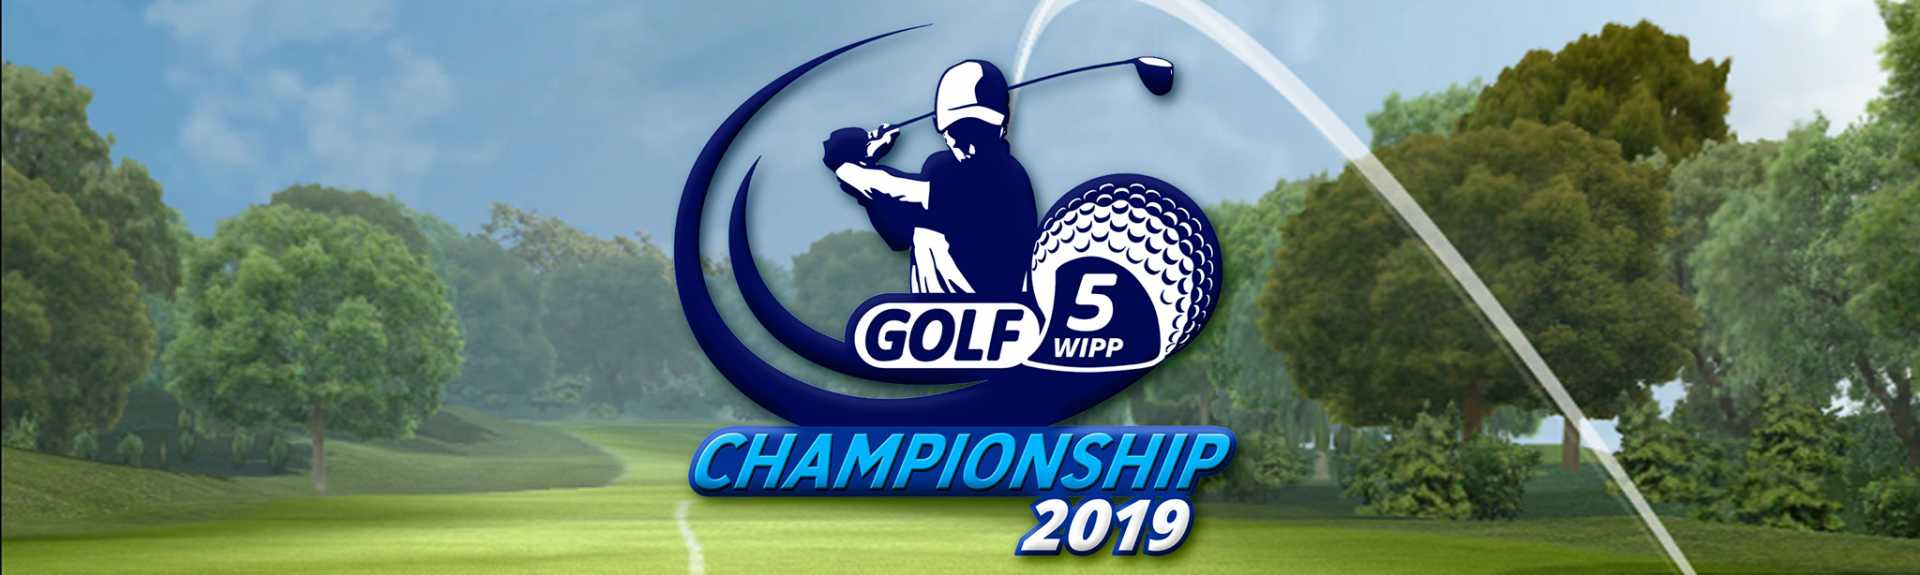 Golf 5 WIPP CHAMPIONSHIP 2019